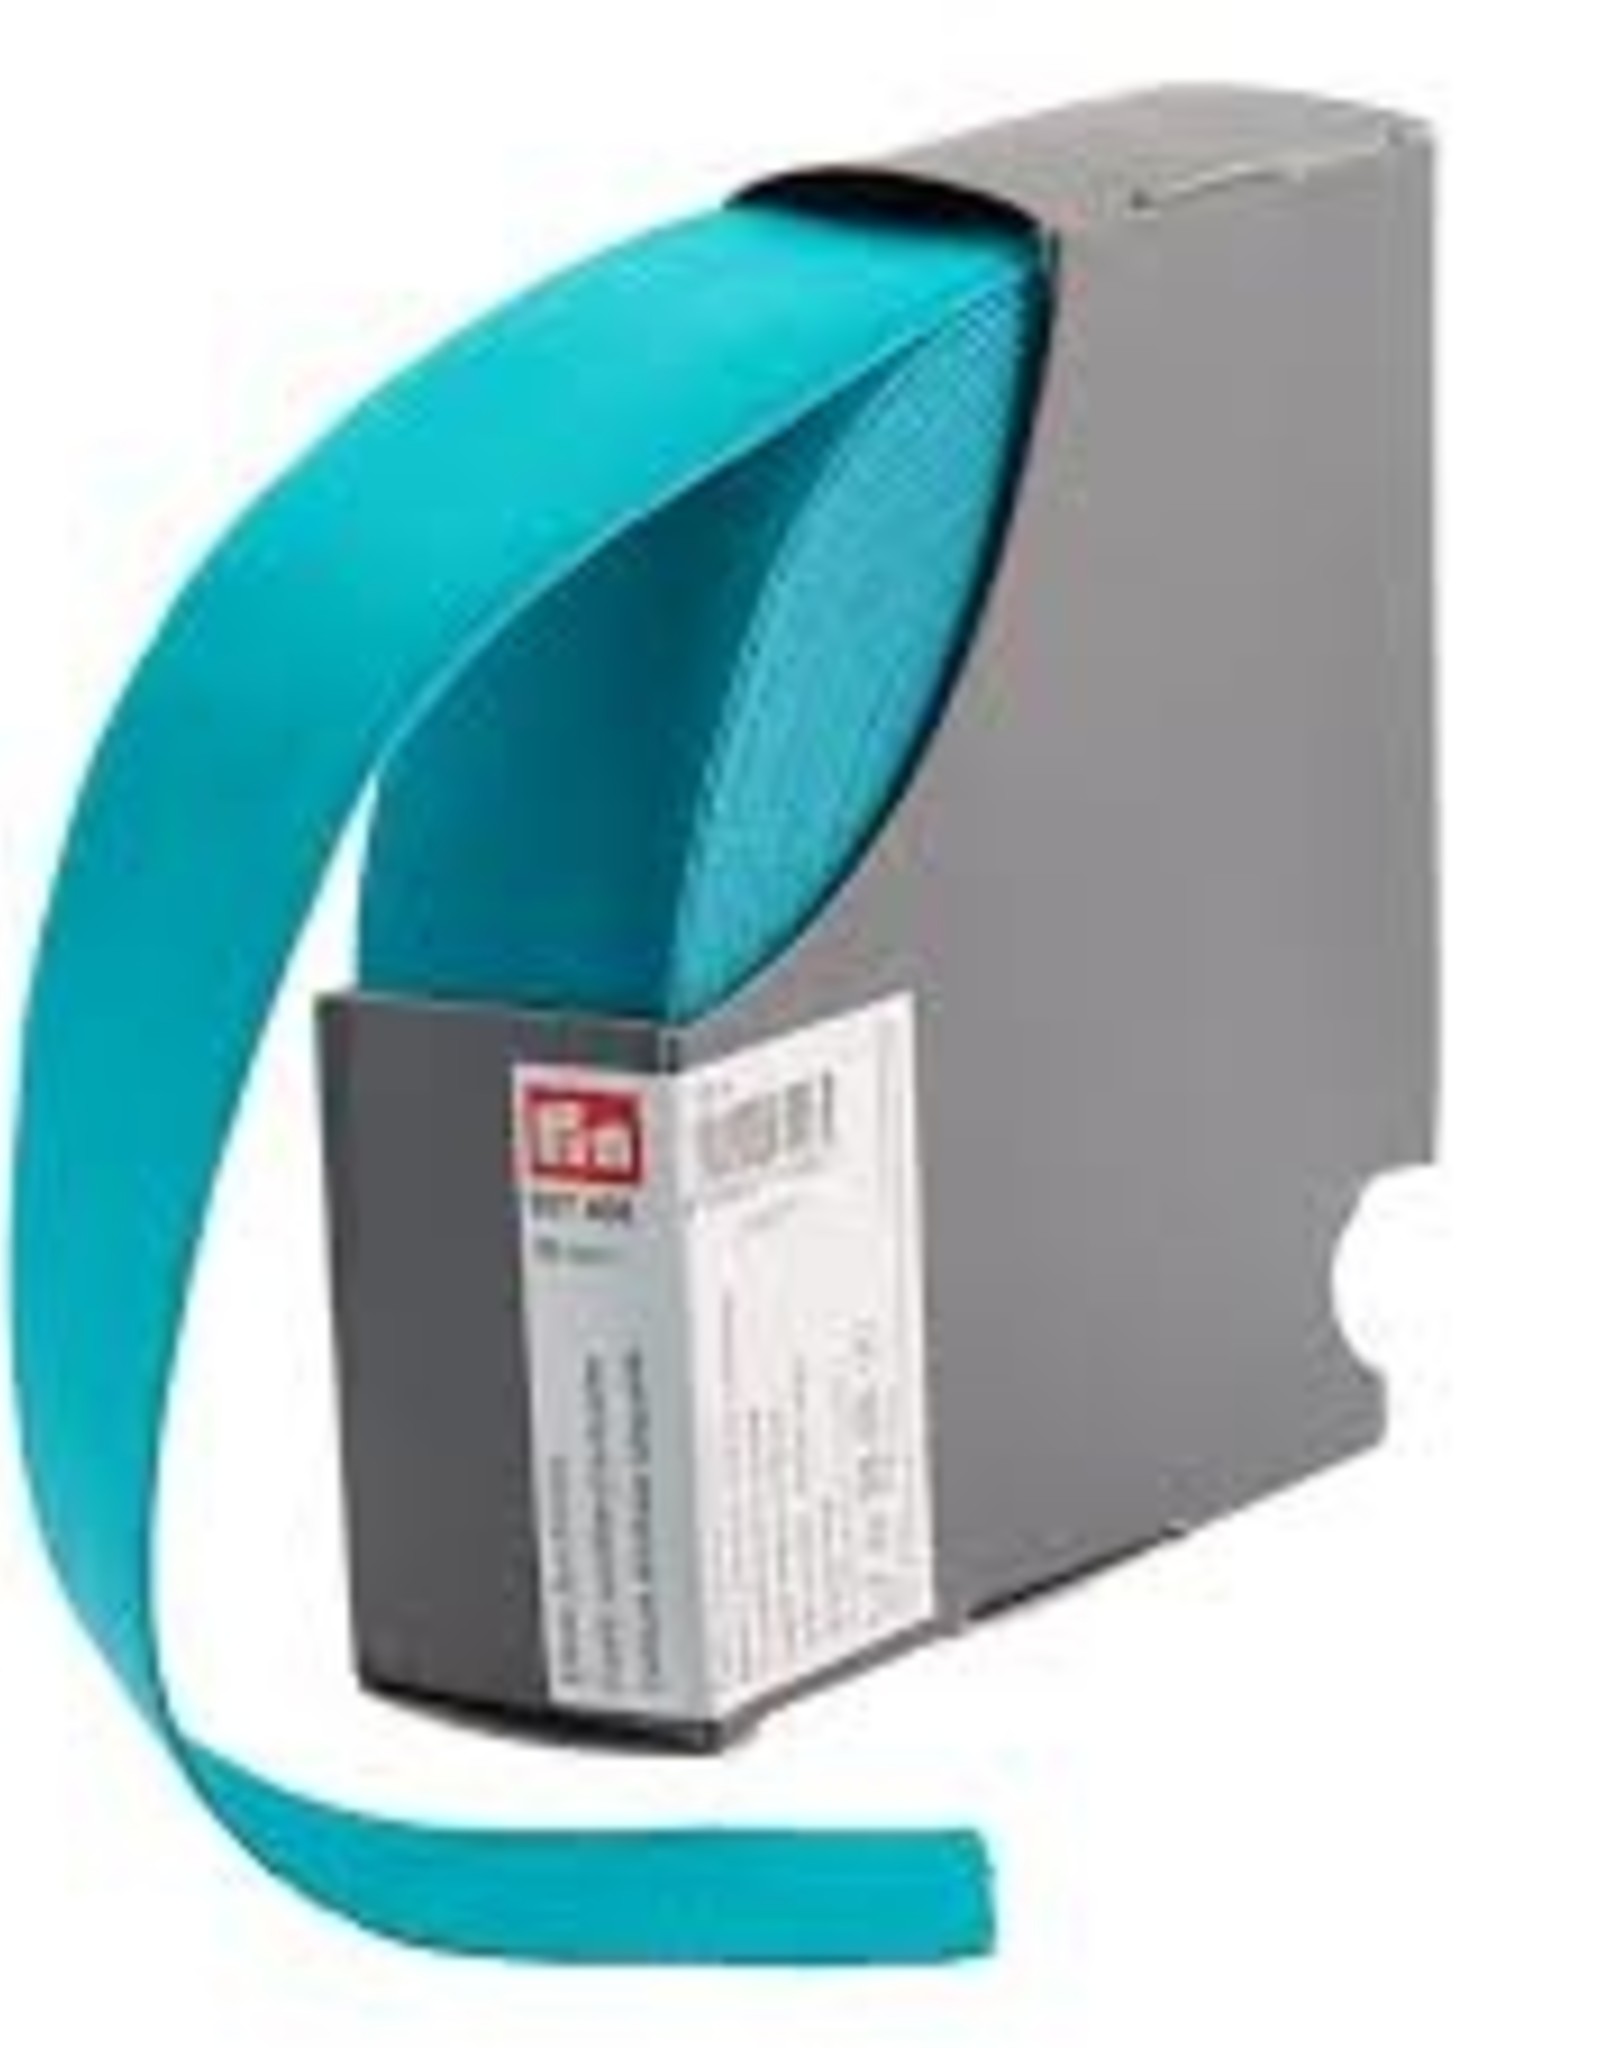 Prym Prym - Taille elastiek uni turquoise 38mm - 957 406